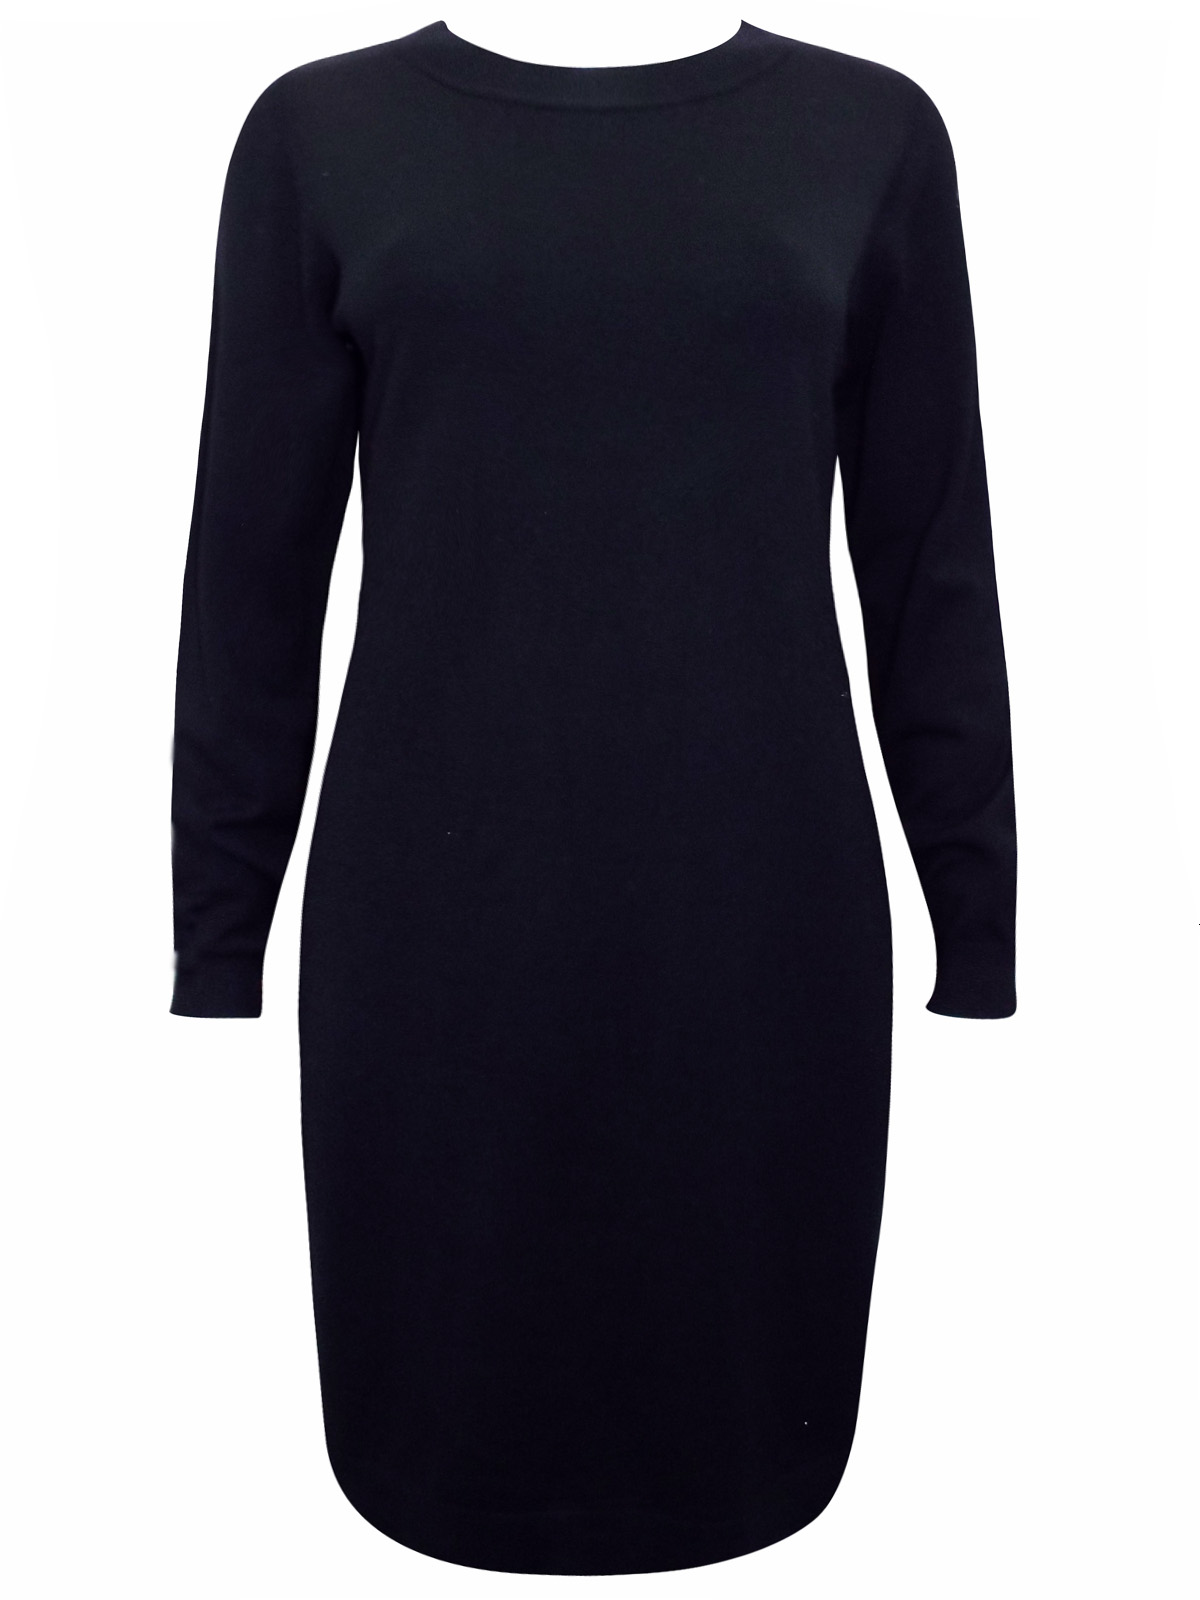 Vero Moda - - VER0 Moda BLACK Longline Viscose Knitted Tunic Dress ...